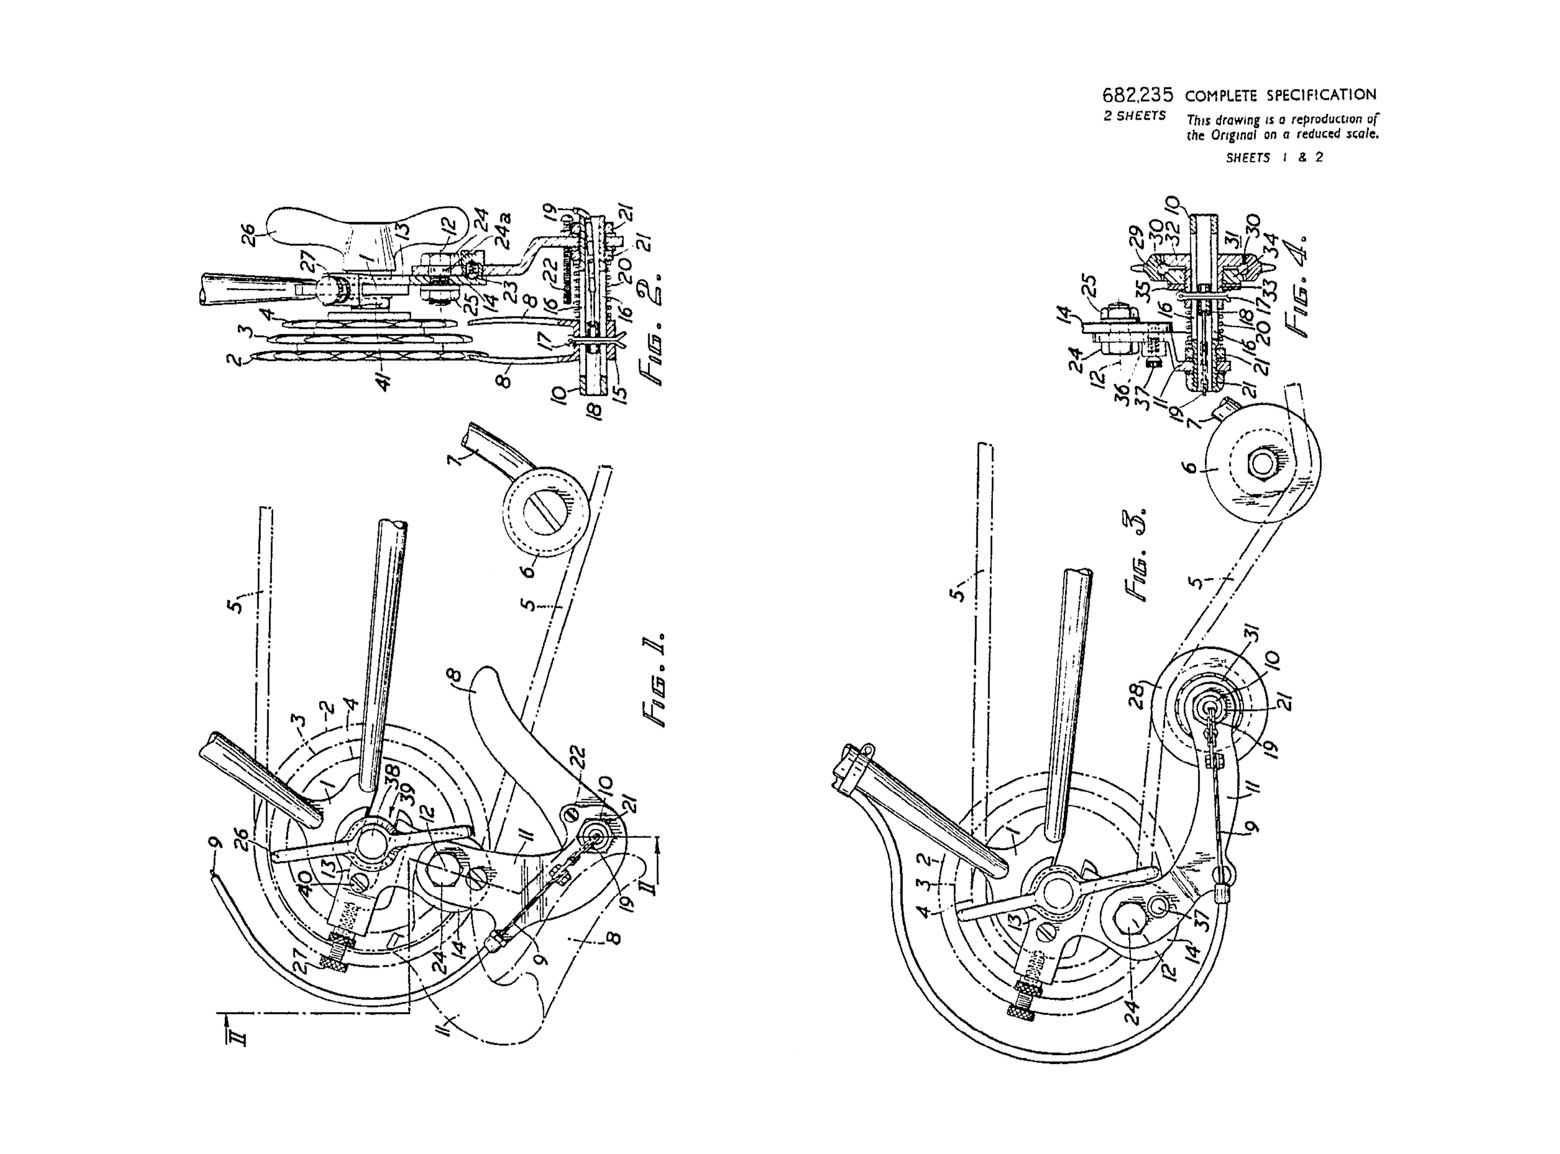 UK Patent 682,235 - Sturmey-Archer scan 8 main image